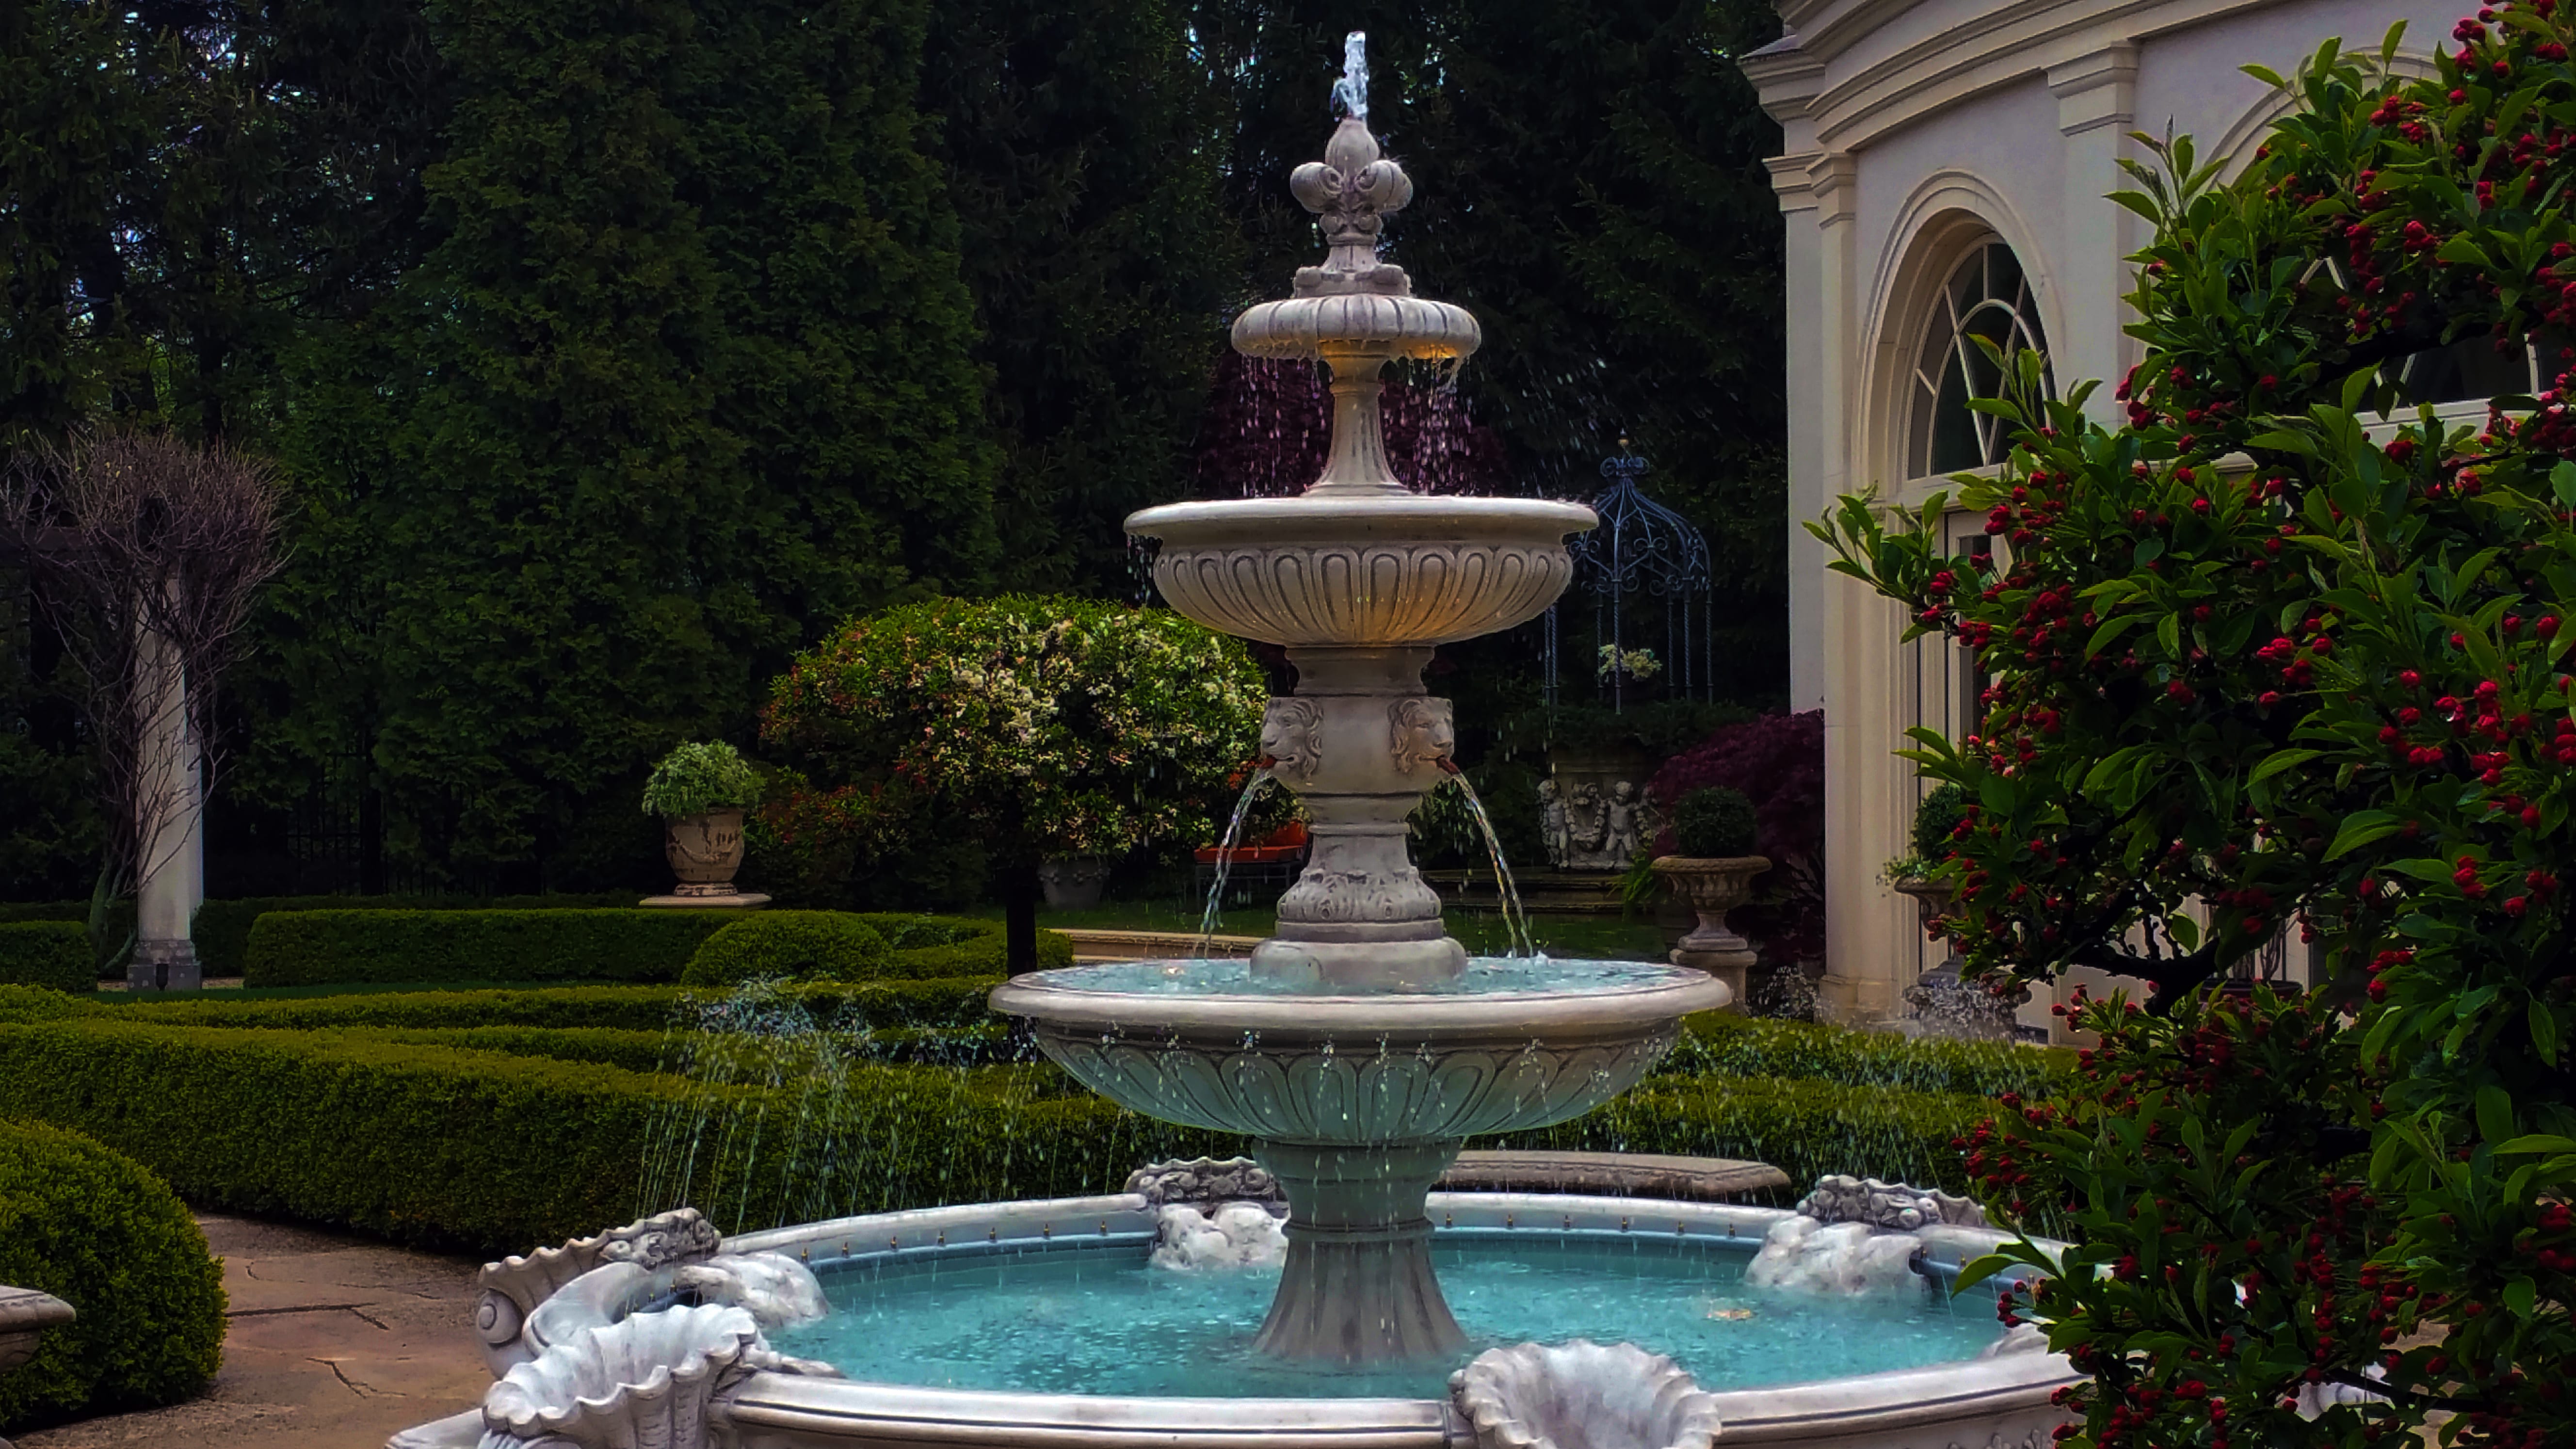 Knot Garden Italian Fountain Reflections Water Gardens